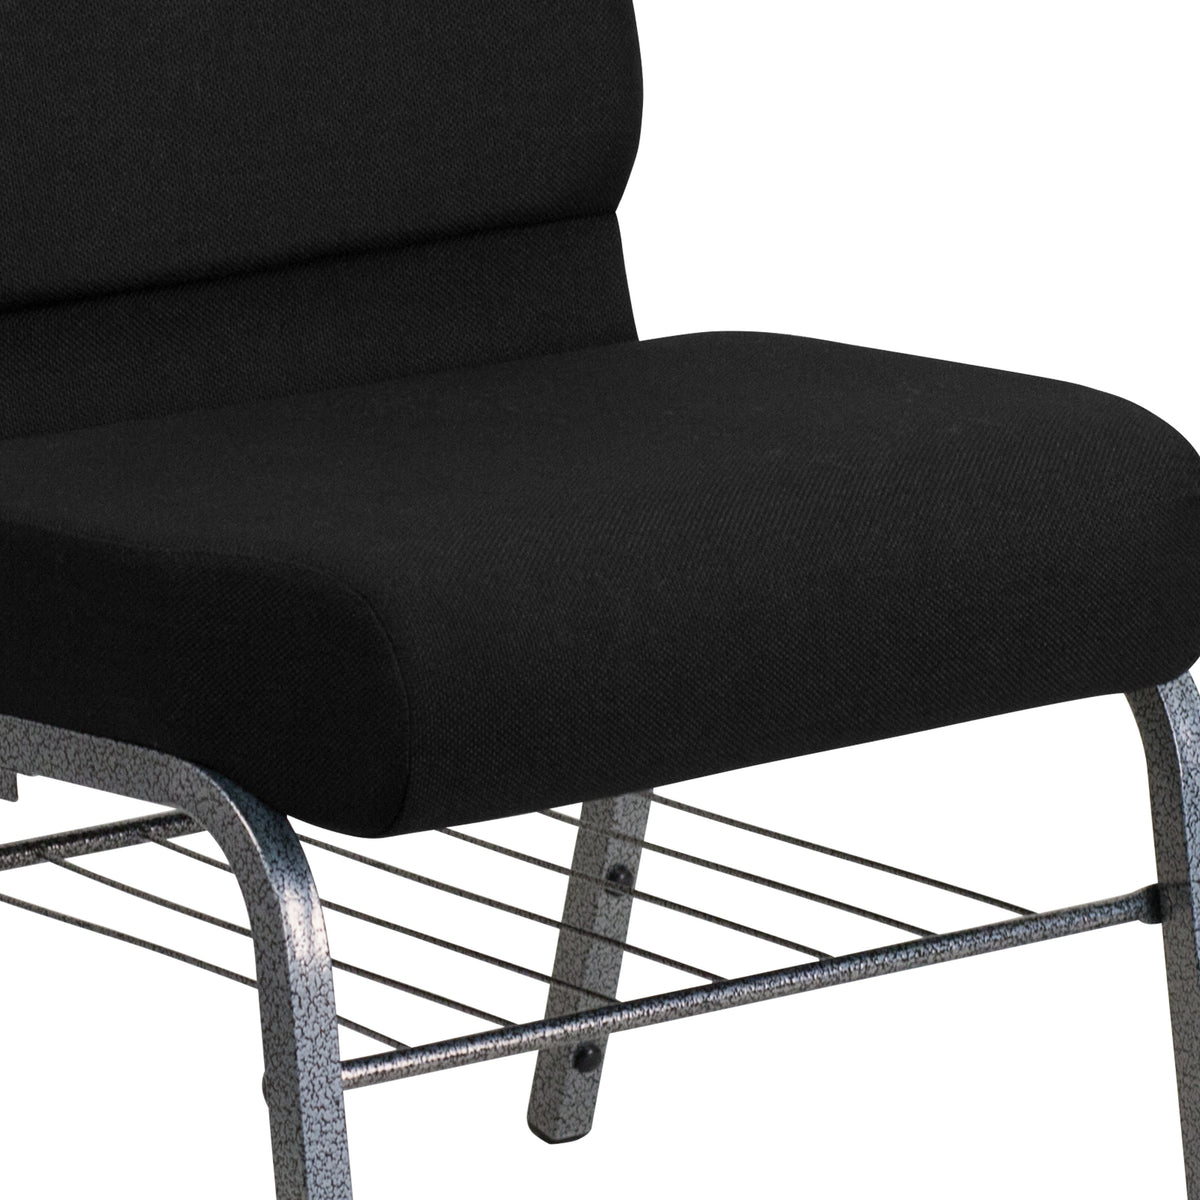 Auditorium Chair - Black Fabric/Silver Vein Frame - 21inch Seat - Book Rack